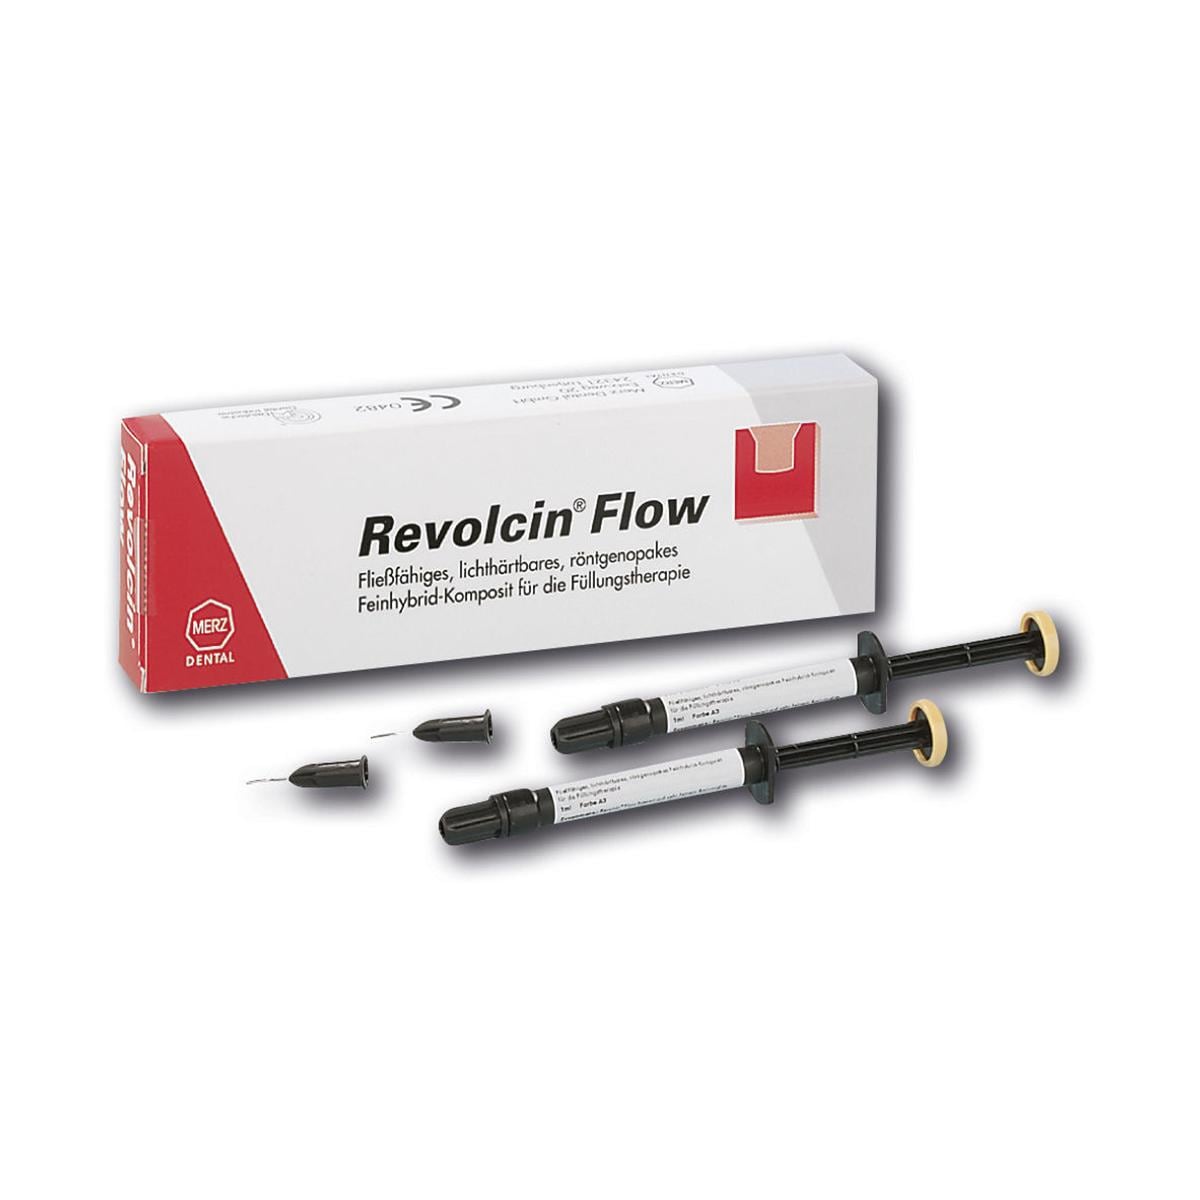 Revolcin® Flow, Spritze - A3.5, Spritze 2 x 1 ml